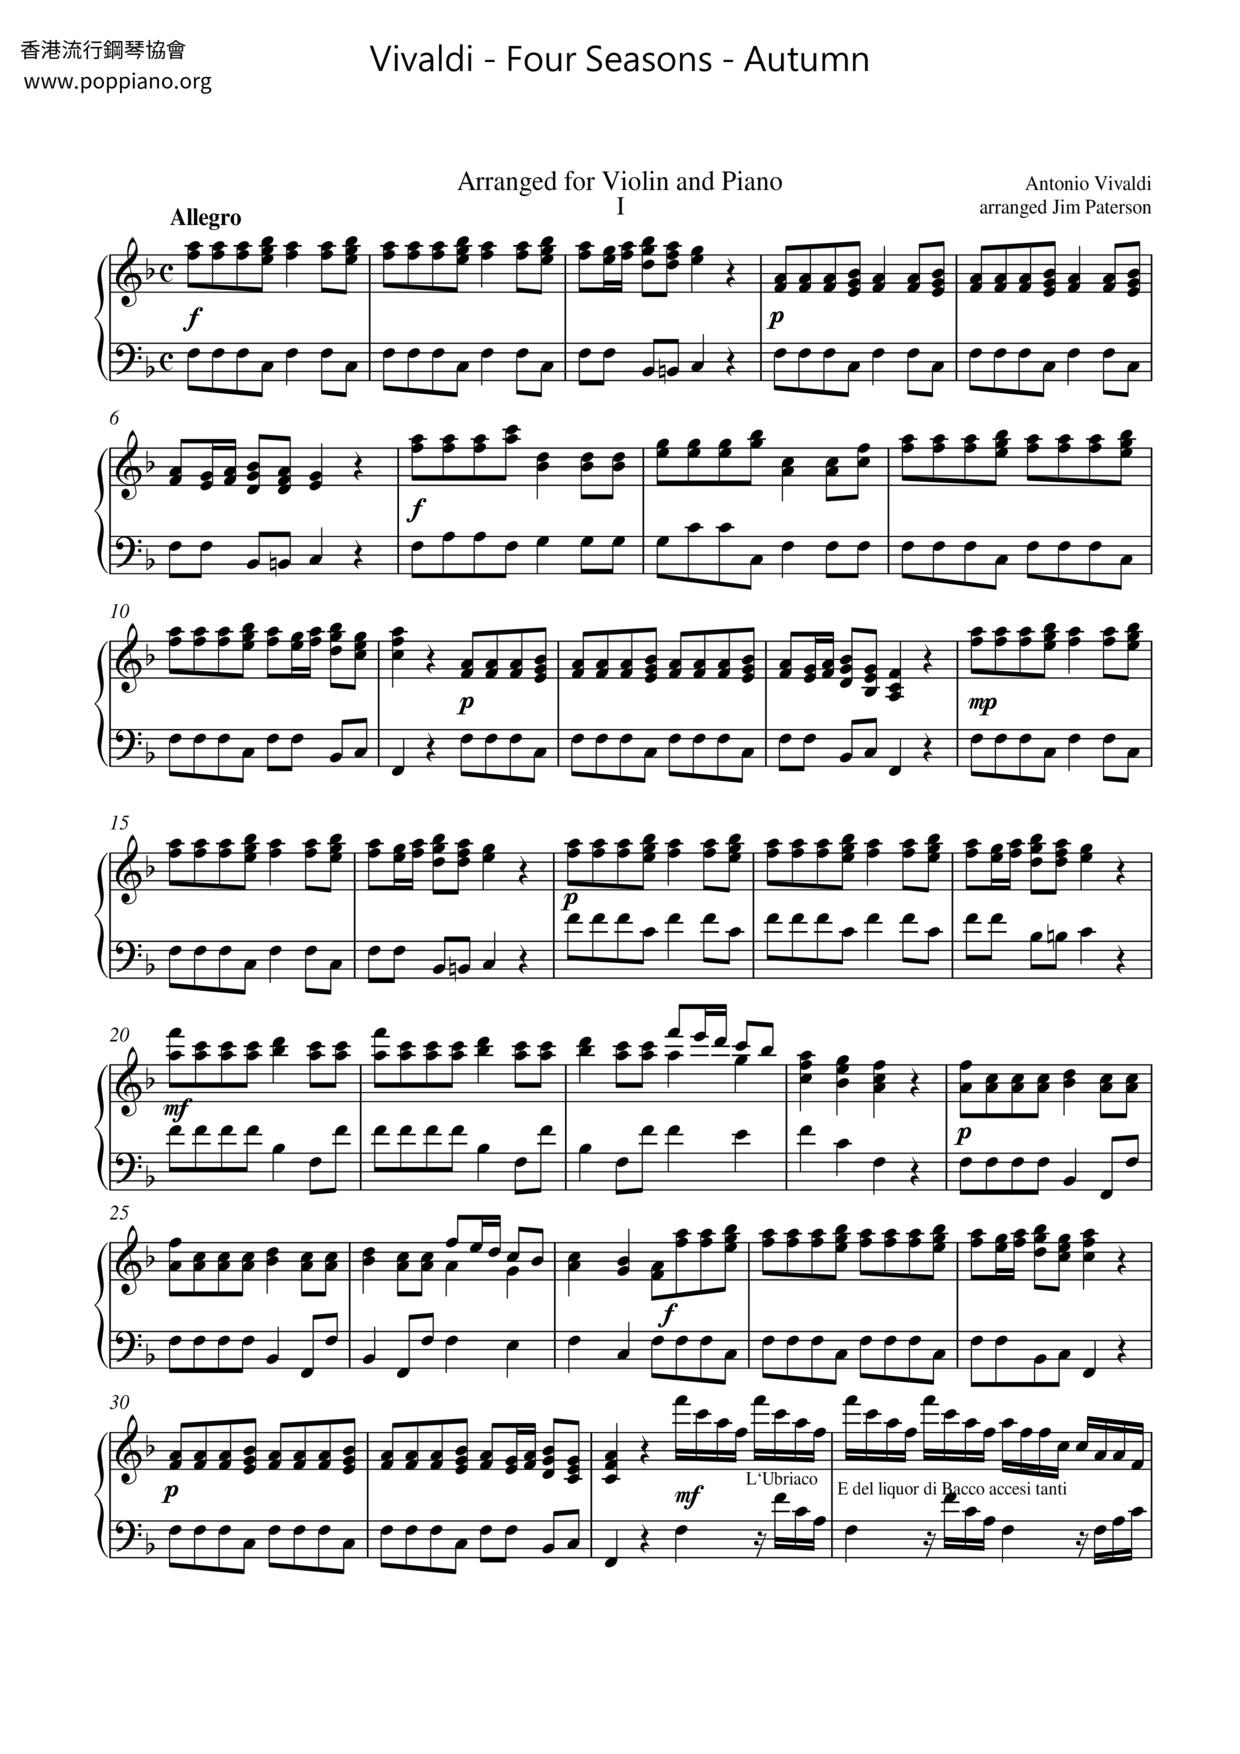 The Four Seasons - Autumn in F Major, RV. 293: III. Allegro Score